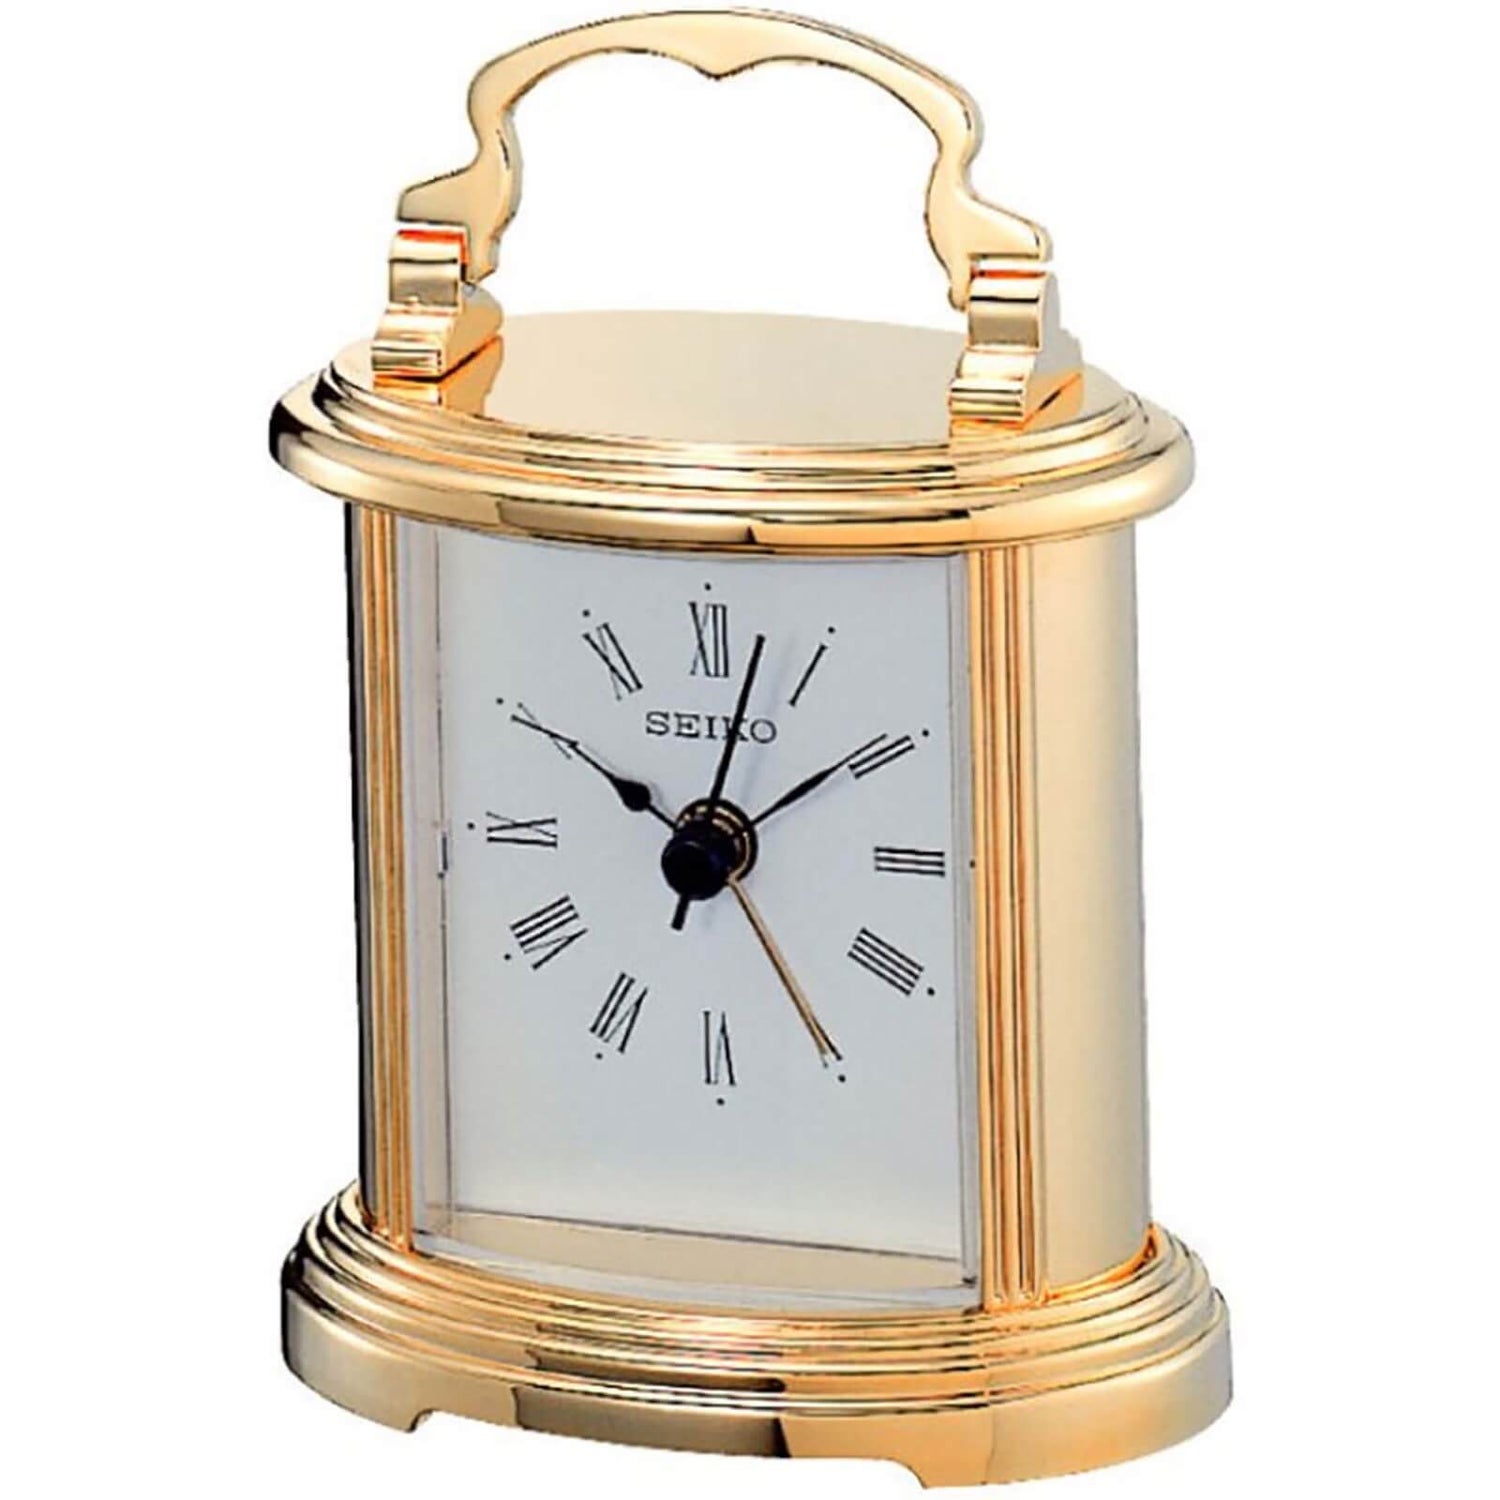 Seiko Mantel Alarm Clock - Gold | Homebase